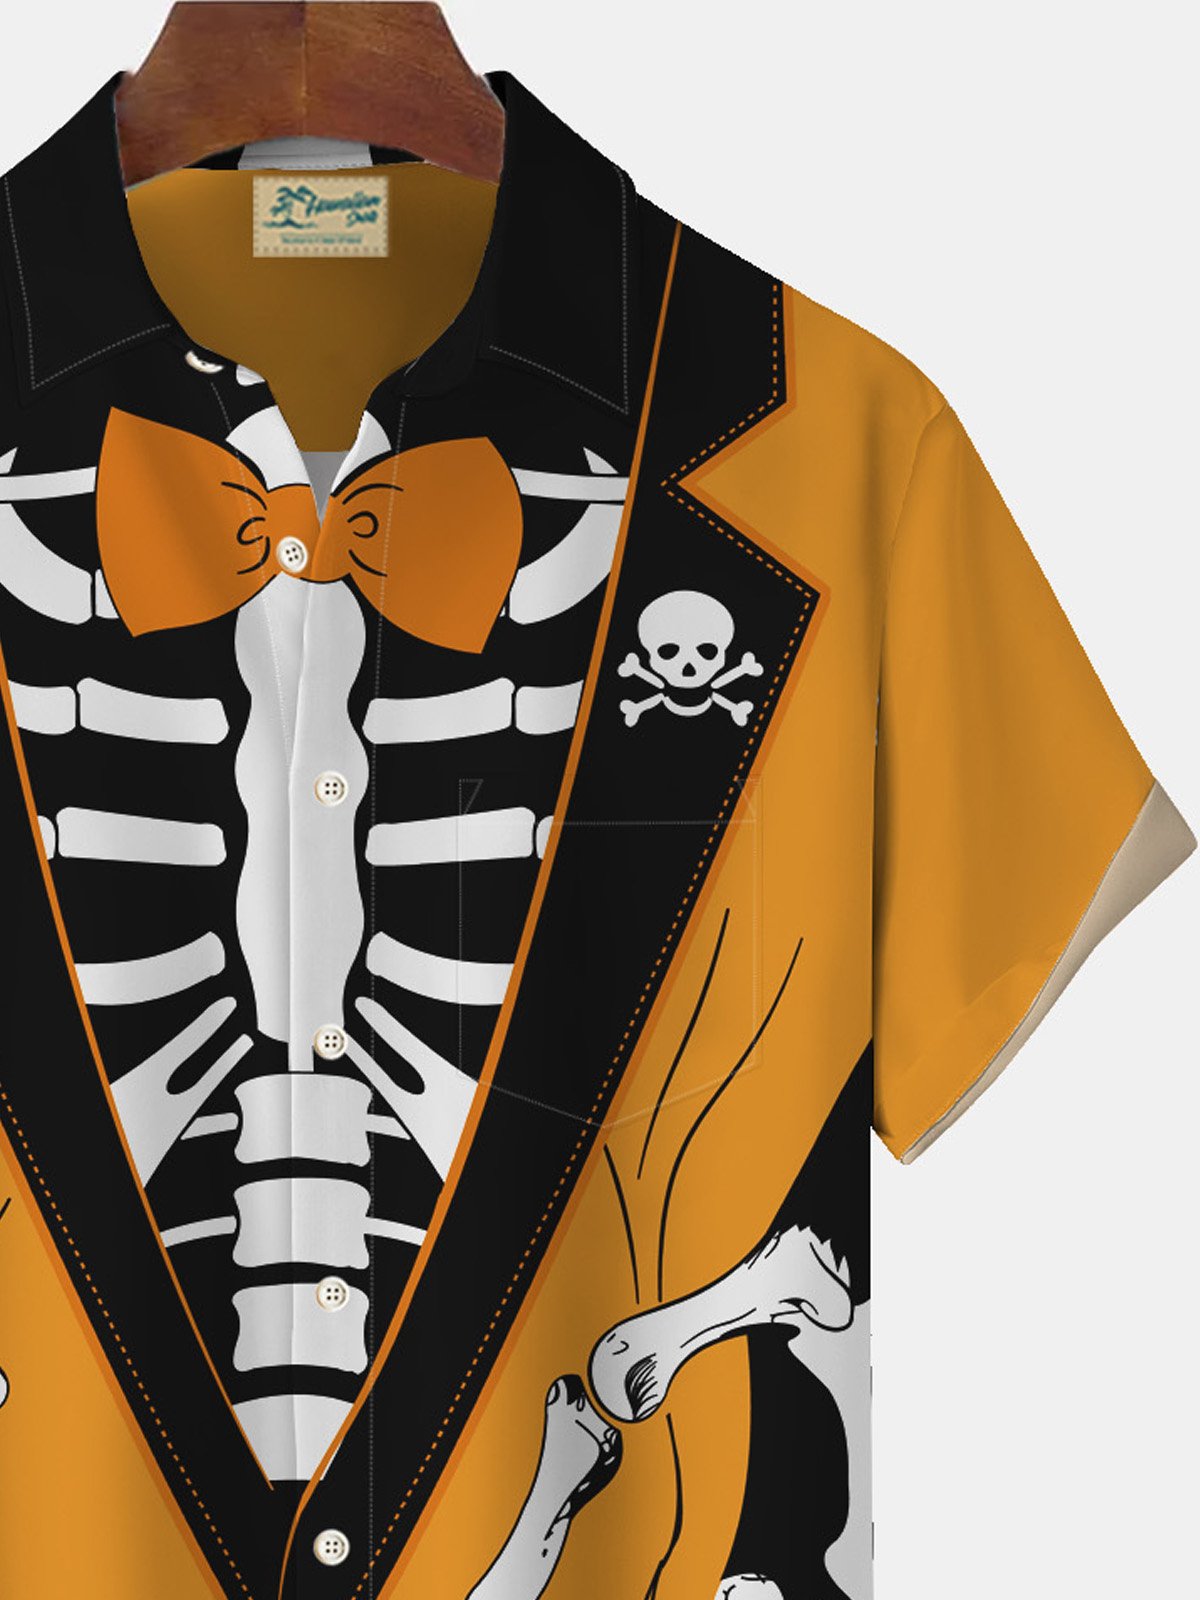 Halloween Fun Skull Print Men's Button Pocket Short Sleeve Shirt